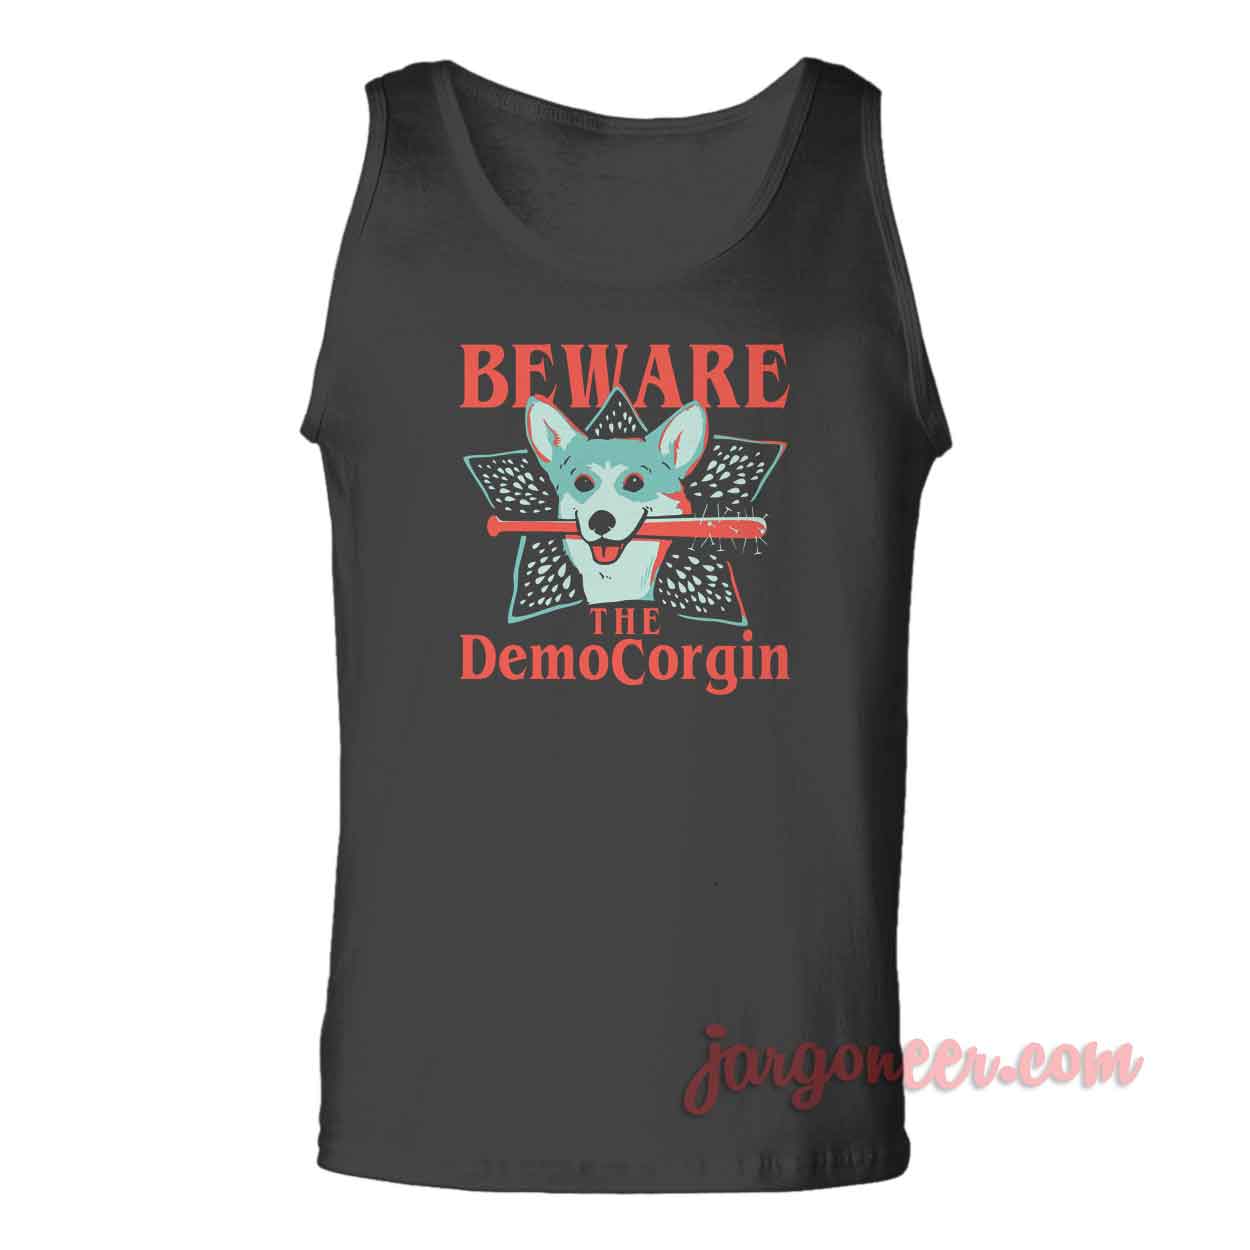 The Beware Democorgin - Shop Unique Graphic Cool Shirt Designs